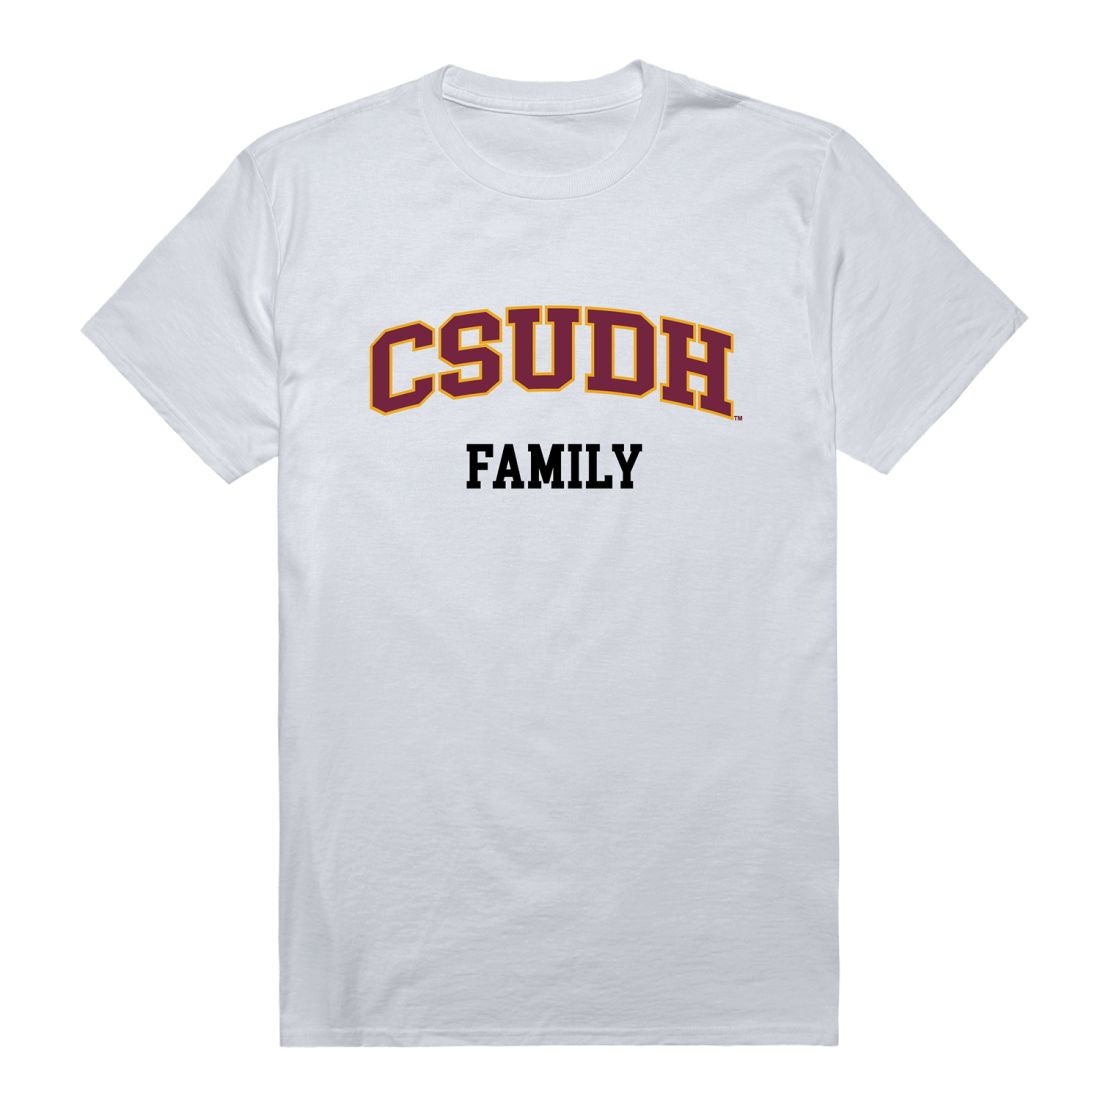 CSUDH California State University Dominguez Hills Toros Family T-Shirt